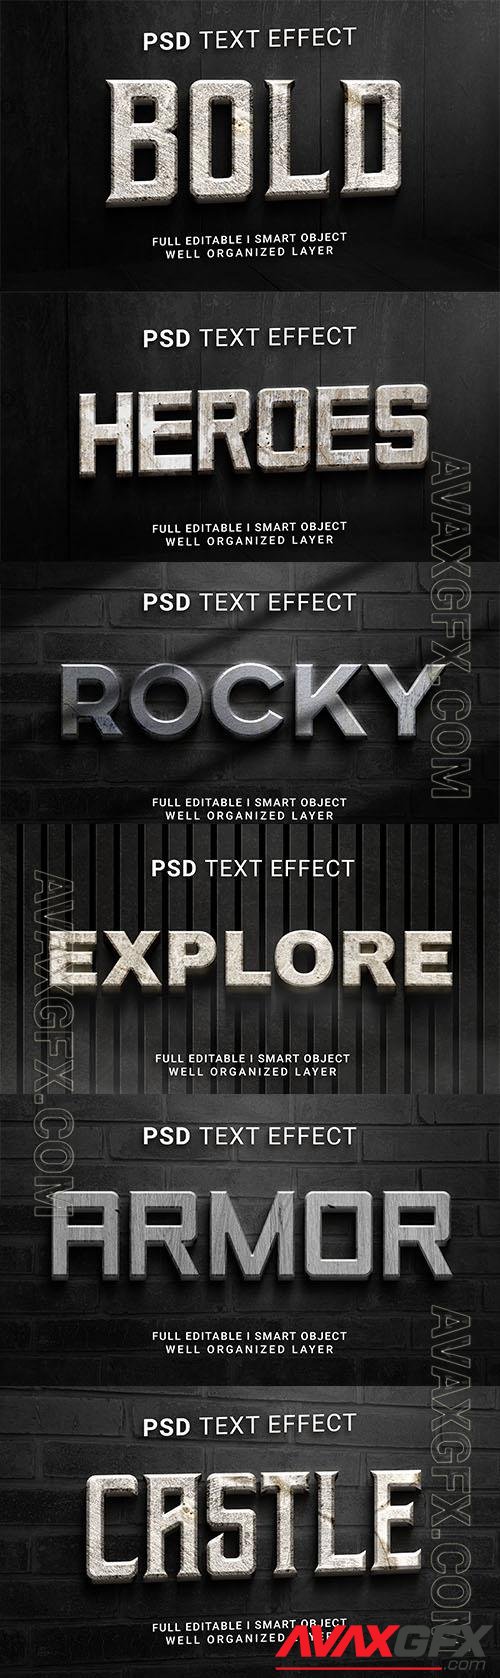 Psd style text effect editable set vol 59